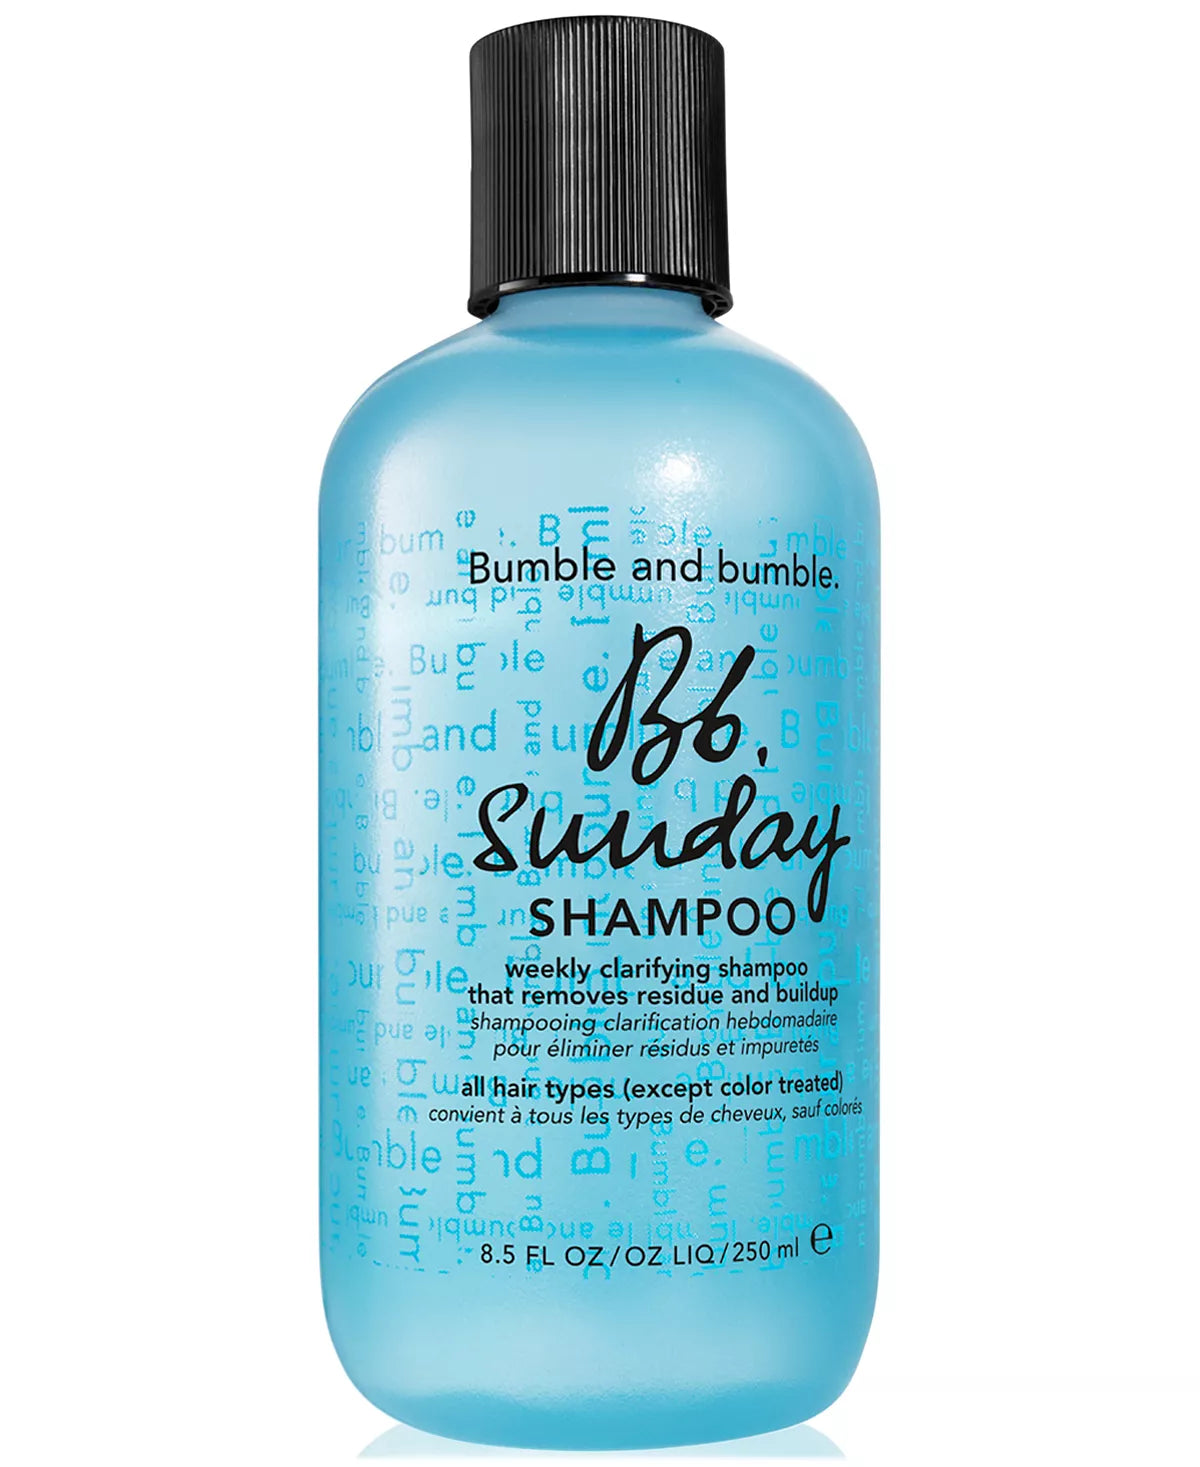 Bumble and bumble sunday Shampoo